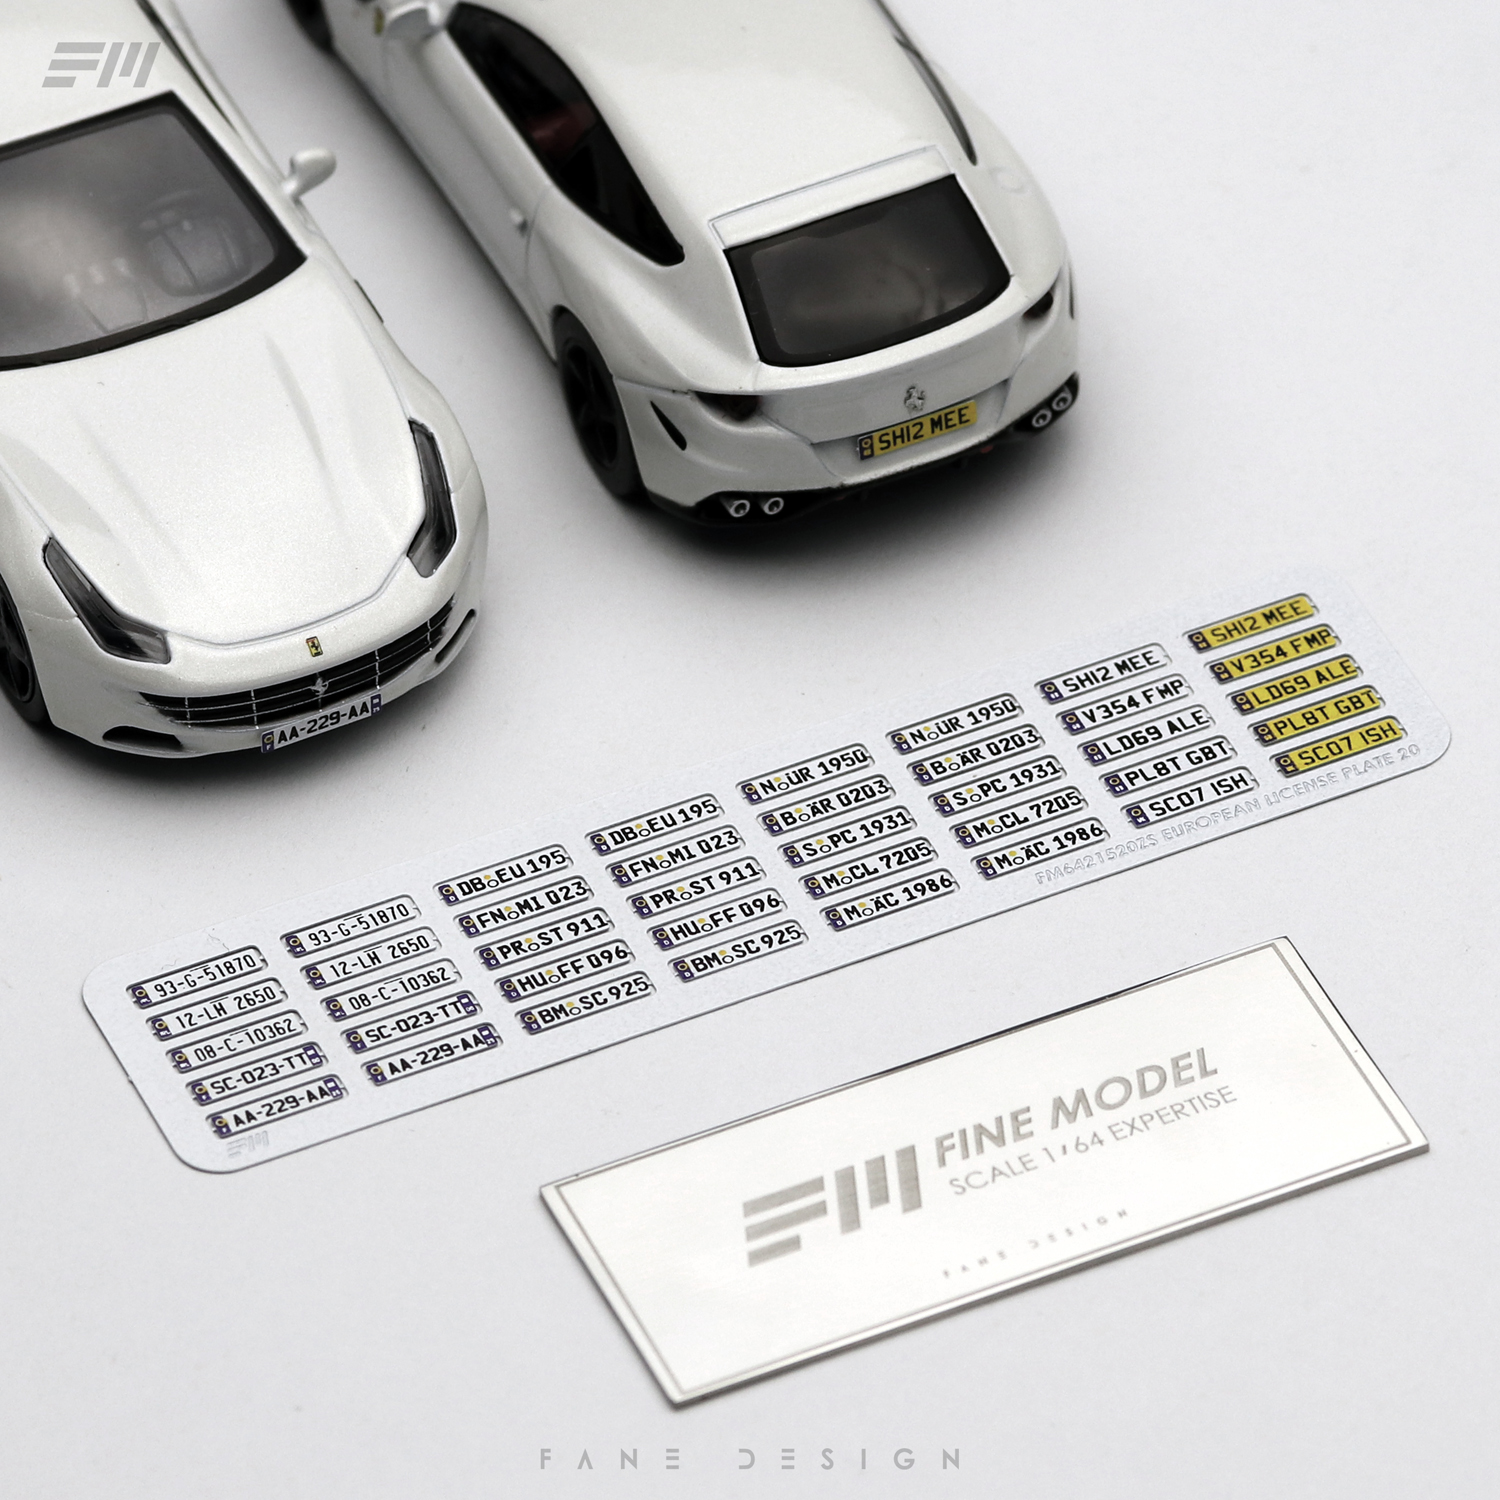 1/64 Scale License Plate European Metallic - 164model